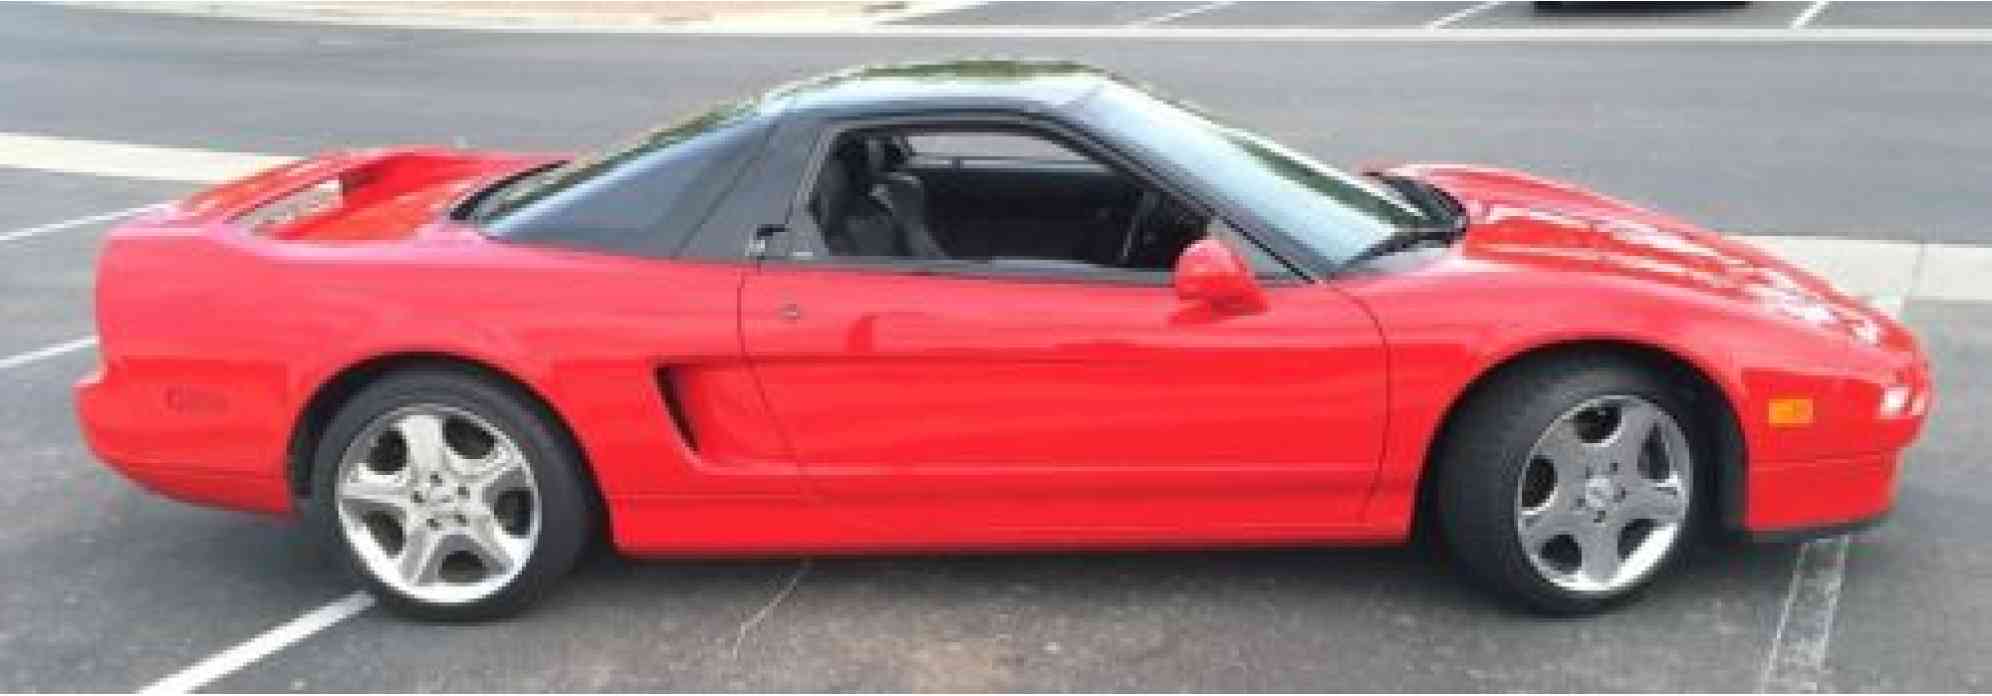 1991 Acura NSX Red/Black